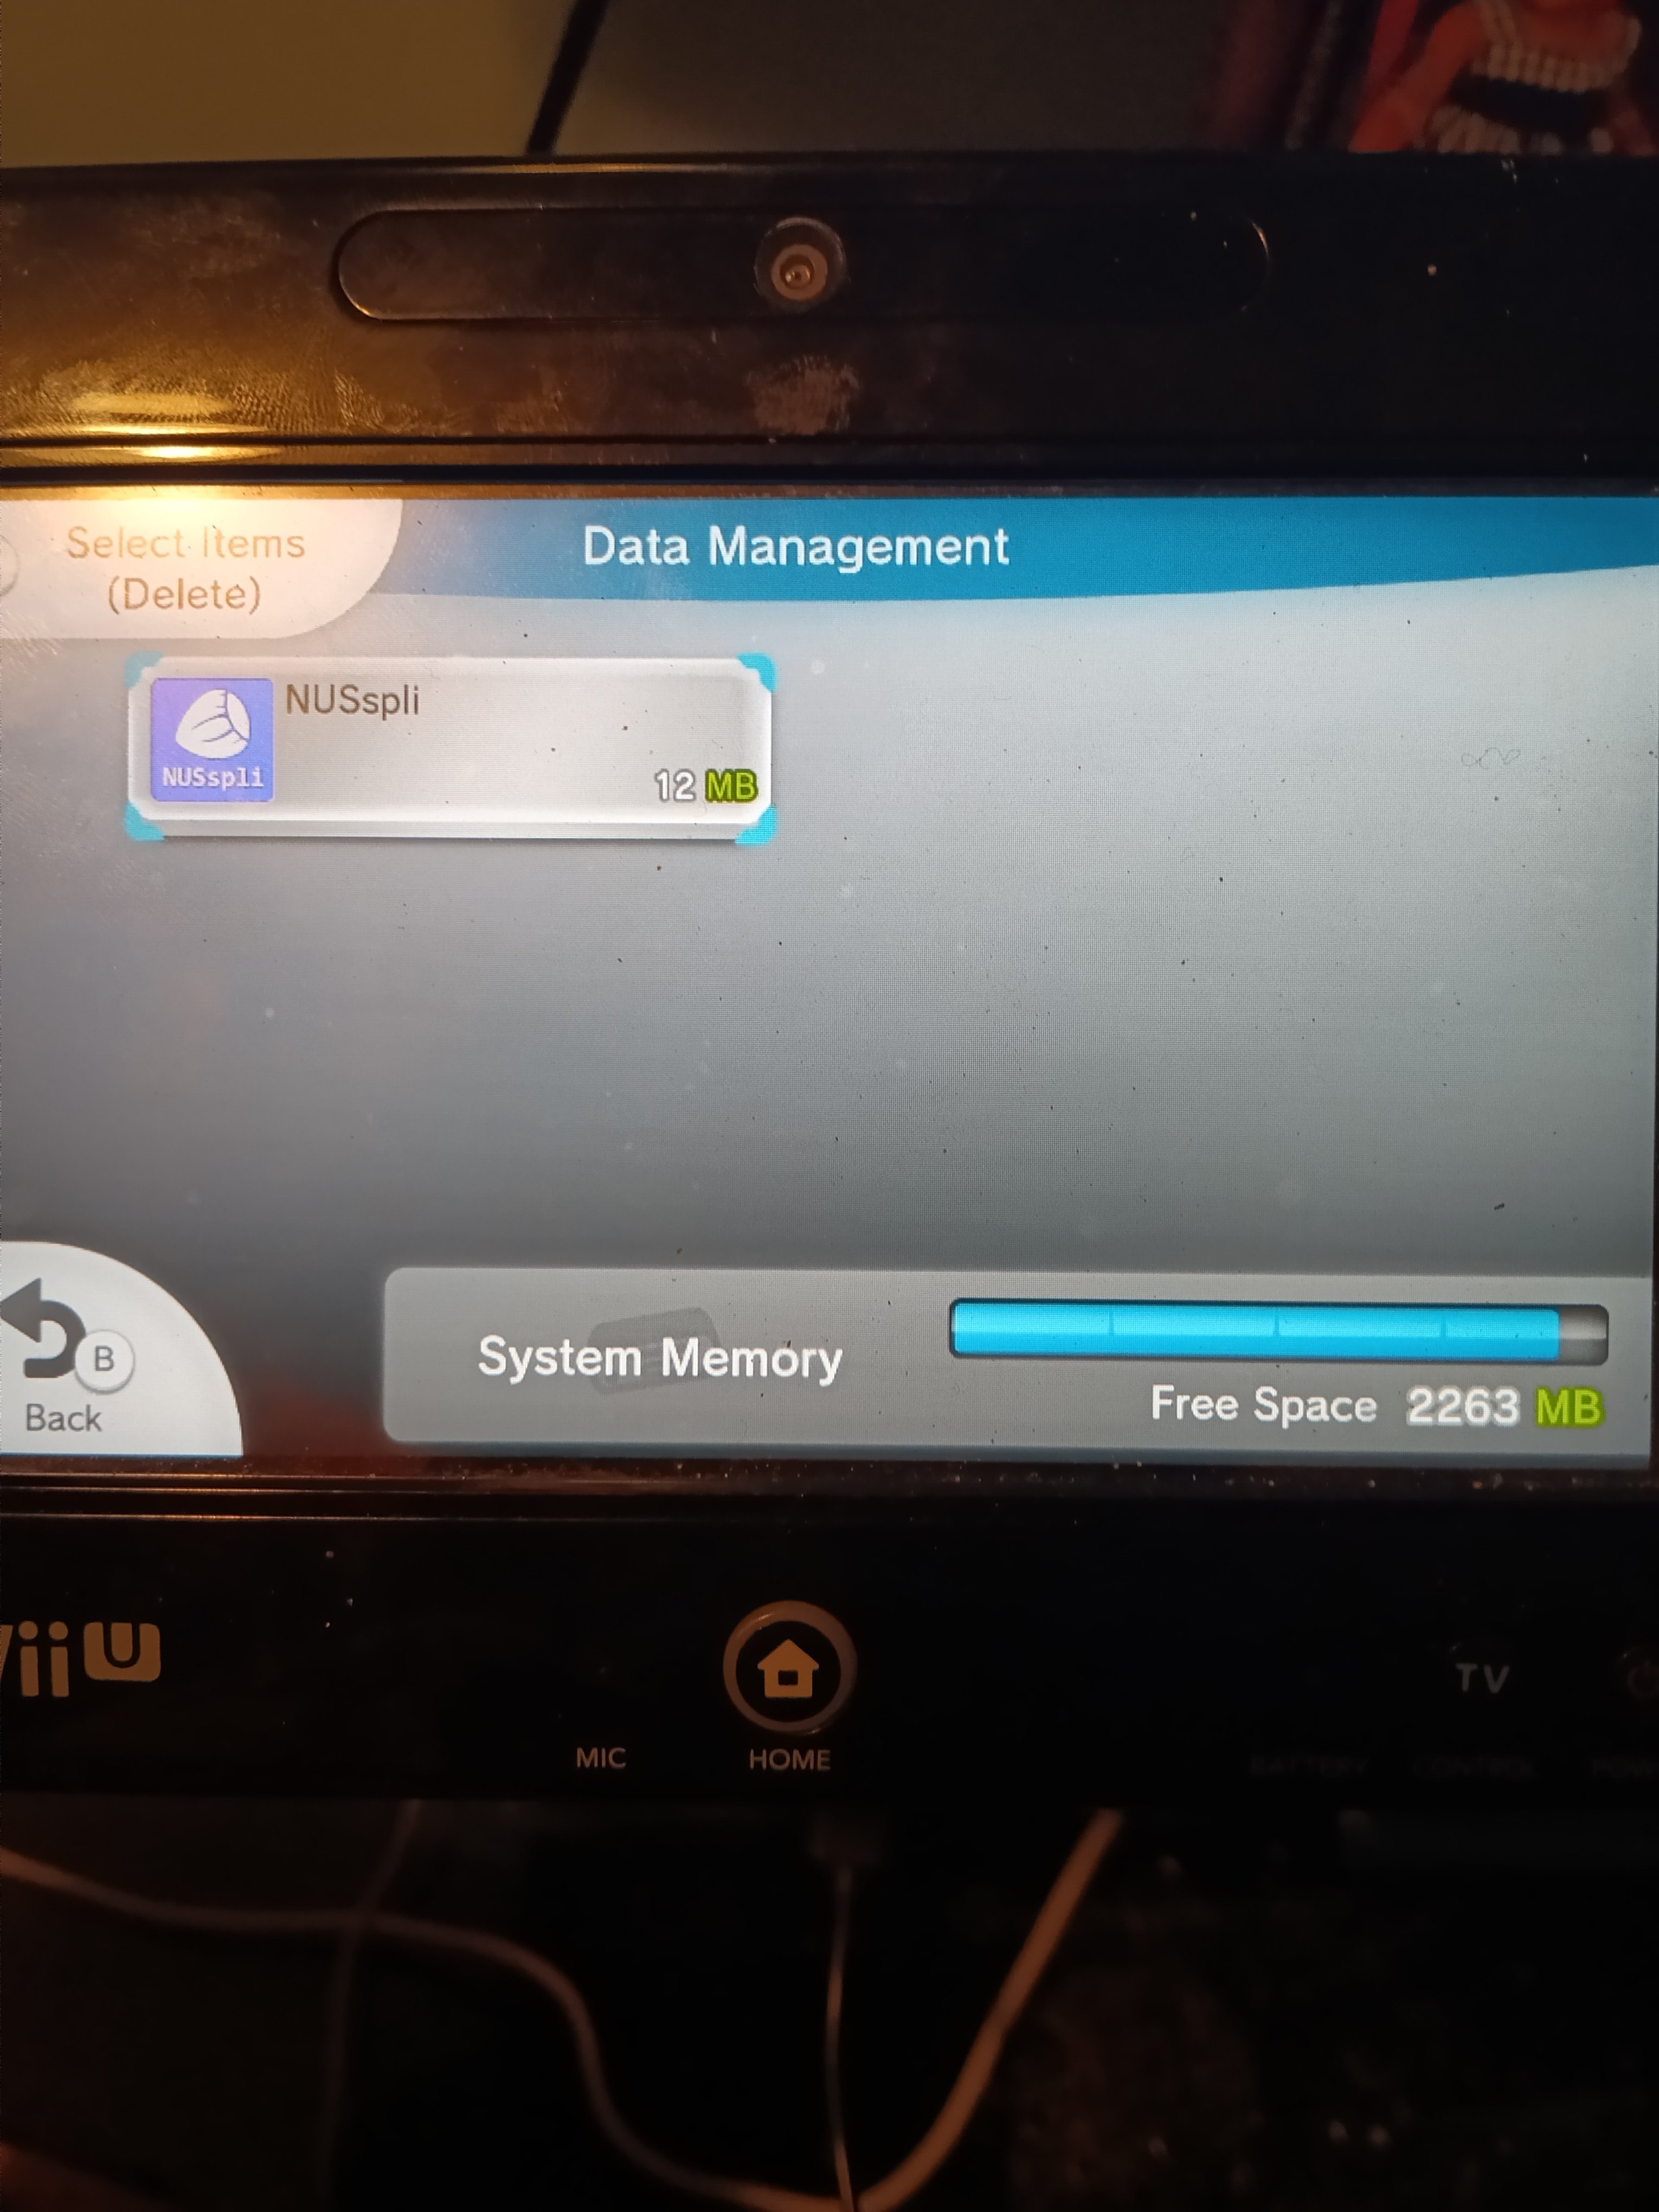 Wii U Game Install Tutorial - 4 Methods - Disc, NUSspli, USB